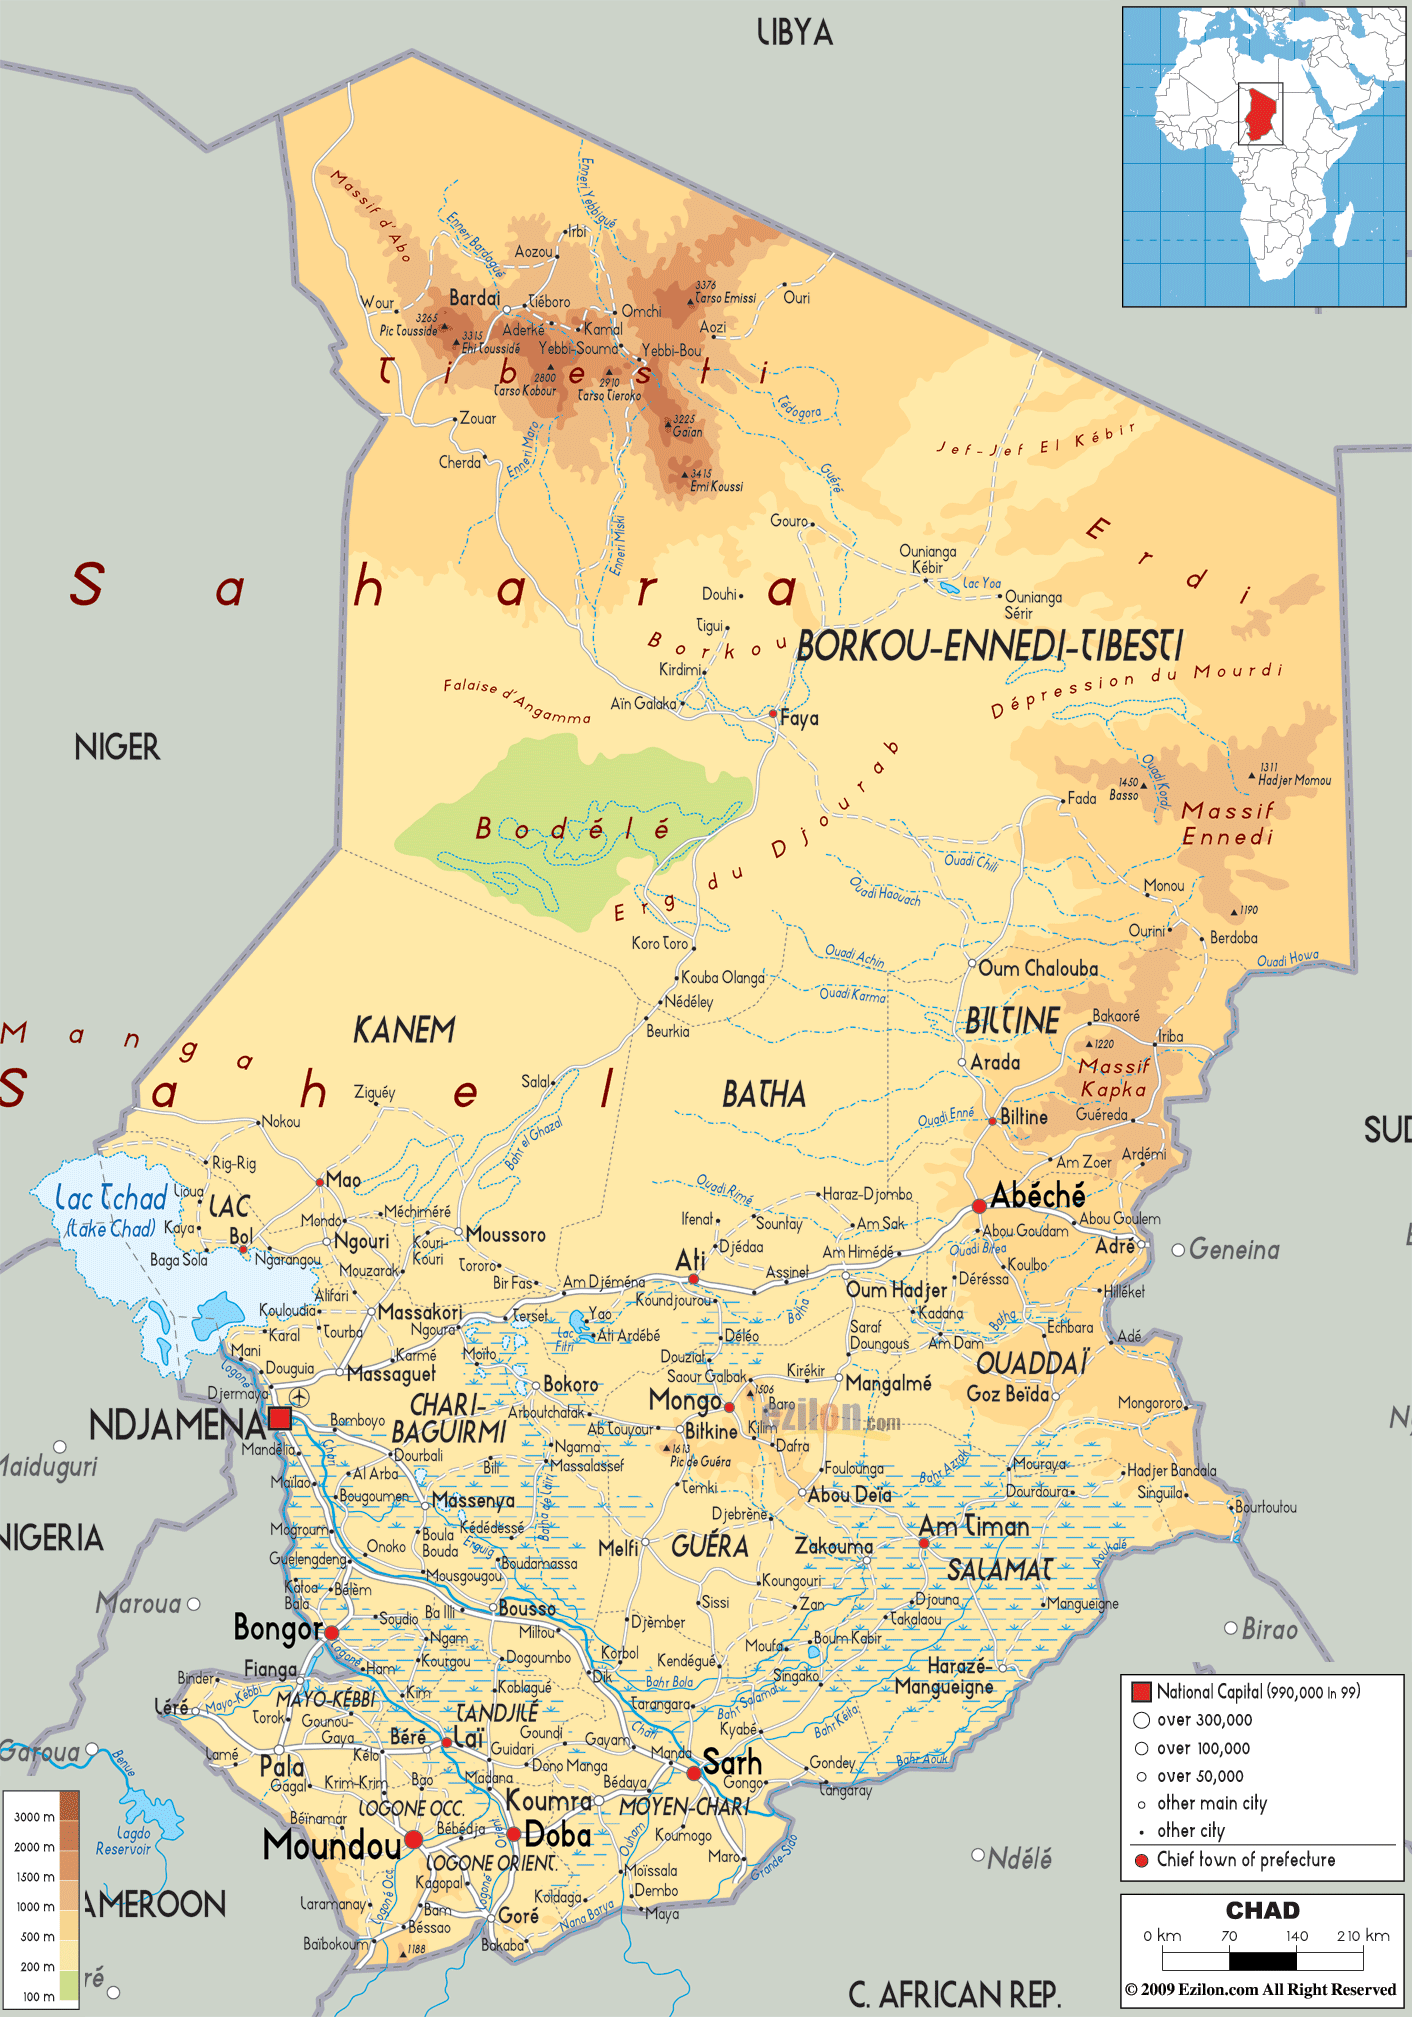 Map of Chad_3.jpg